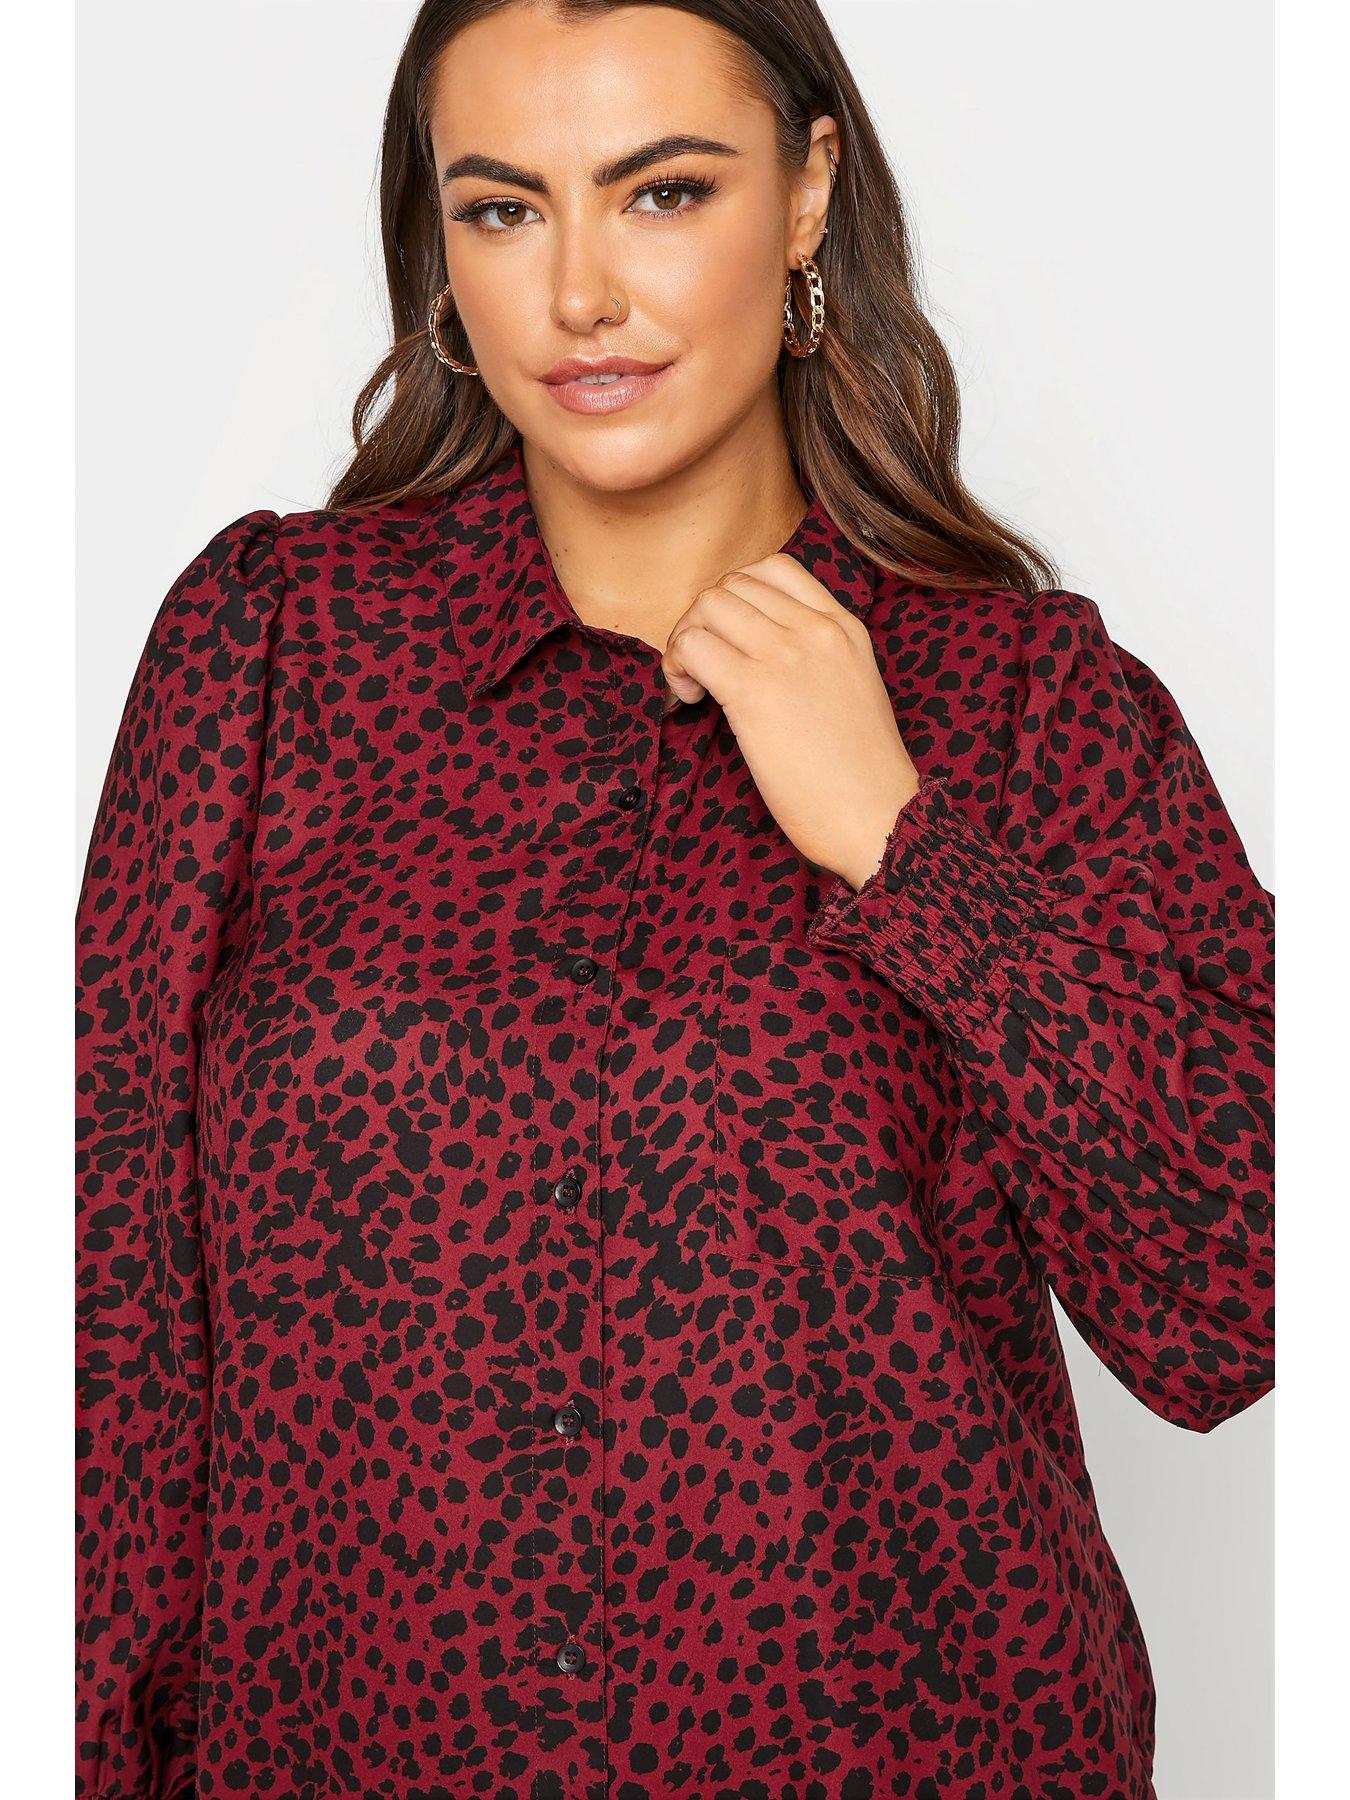 Blouses & shirts Yours Shirred Cuff Long Sleeve Jewel Leopard Boyfriend Shirt - Pink